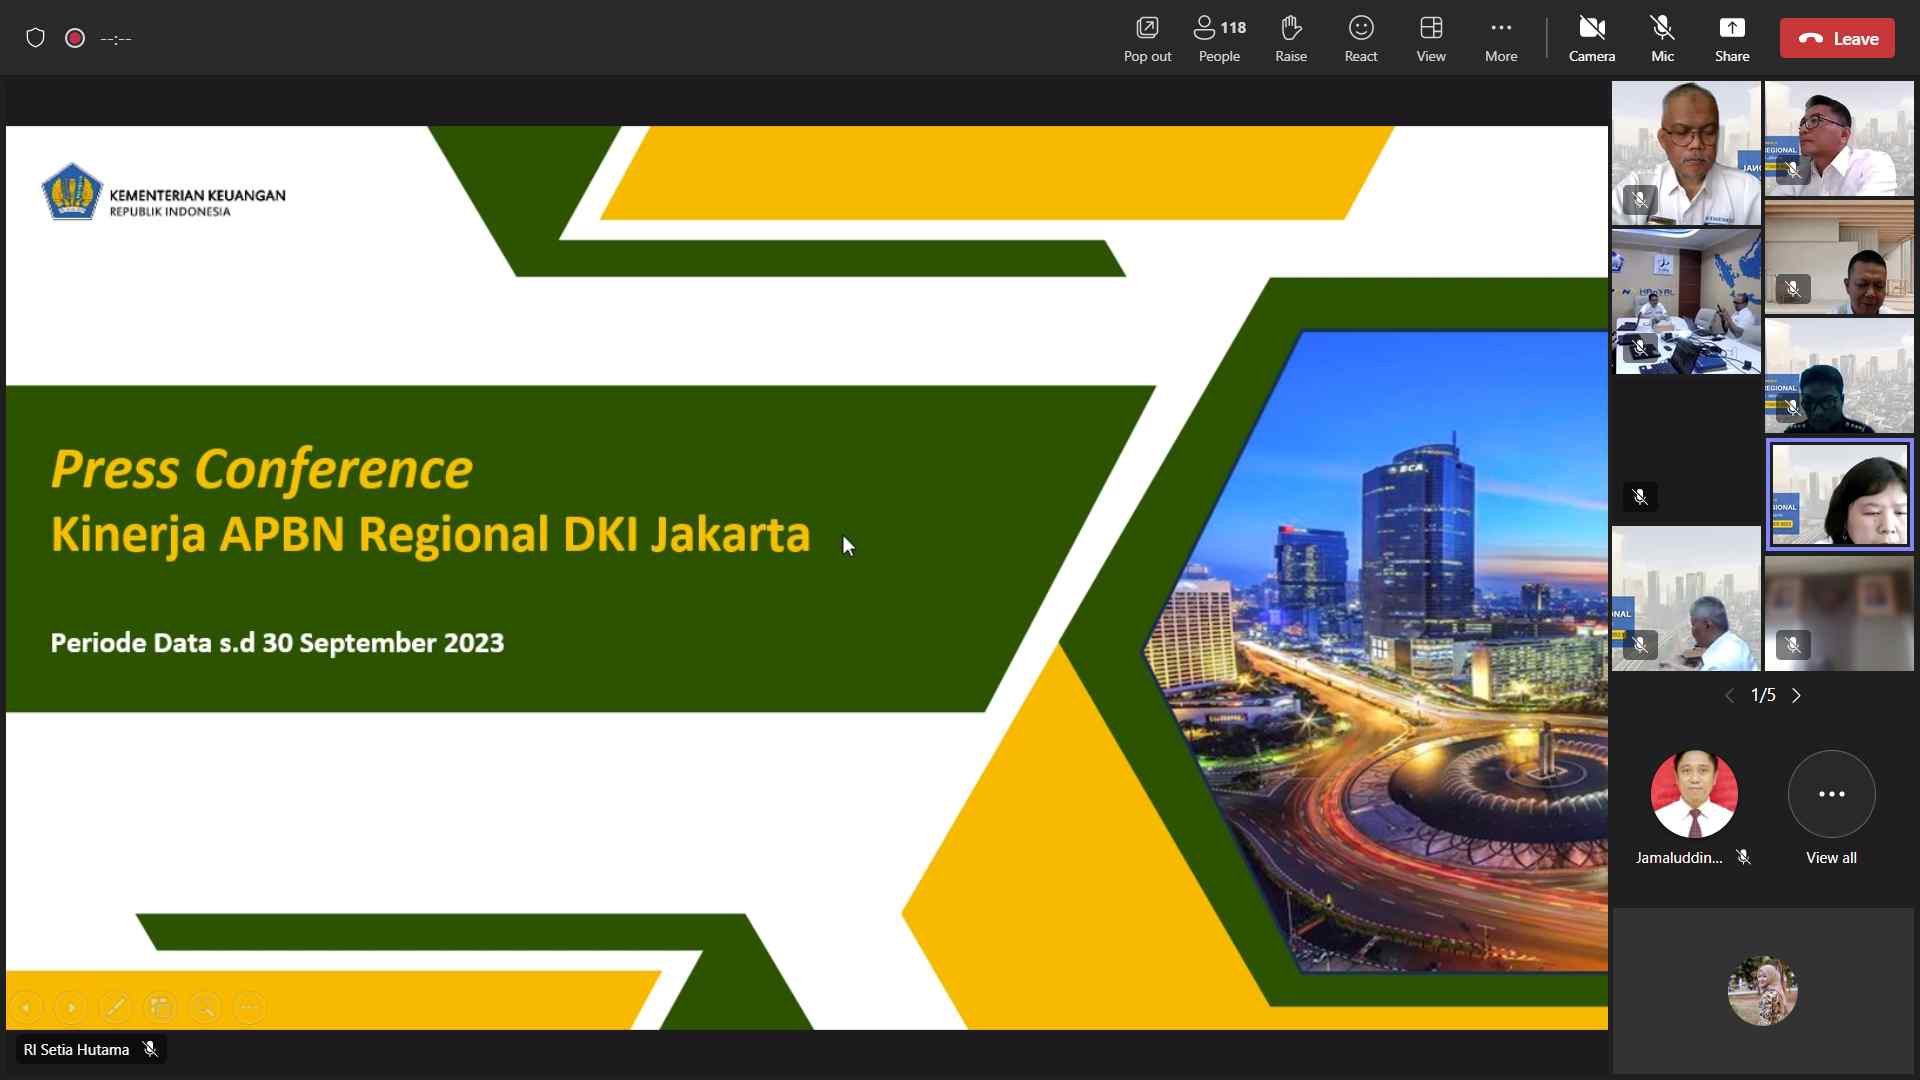 Press Conference APBN Kita Regional Provinsi DKI Jakarta sampai dengan 30 September 2023